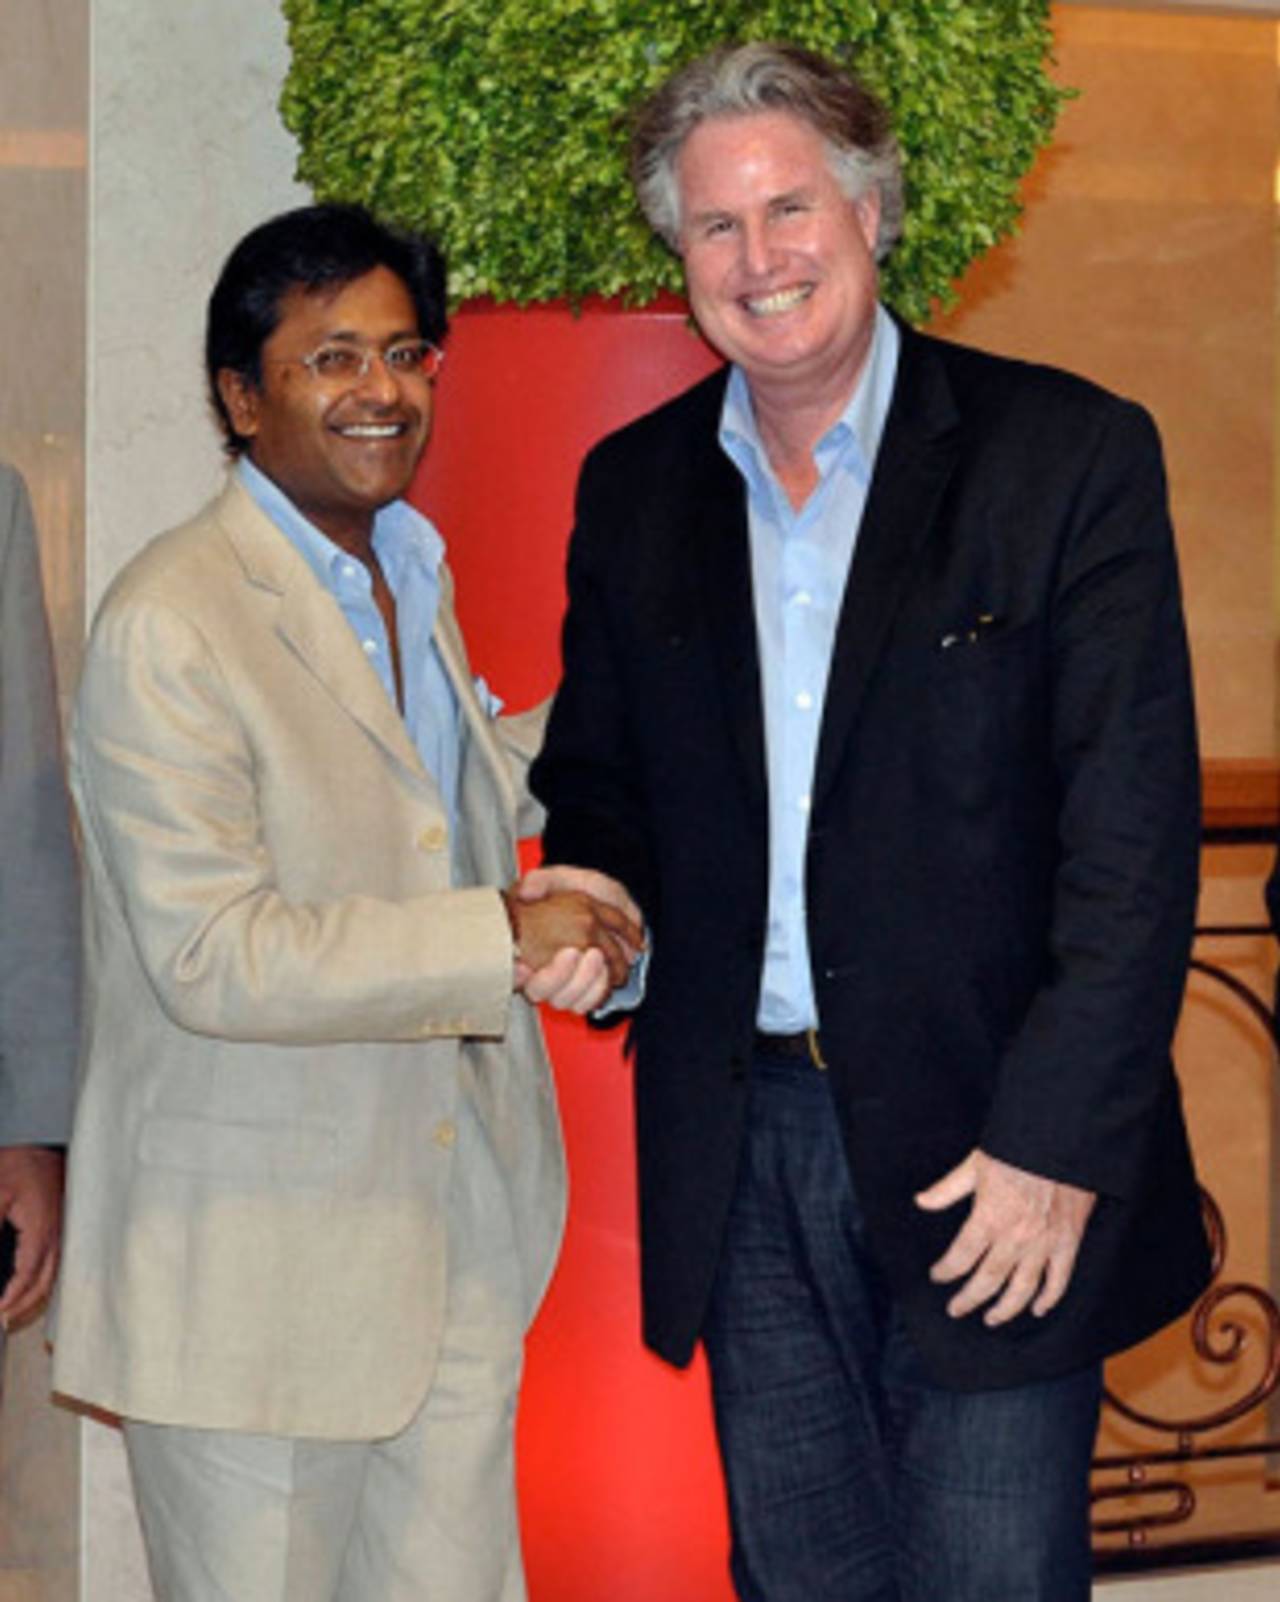 Lalit Modi and Don Lockerbie meet in Dubai to discuss IPL initiatives in USA, February 10, 2010